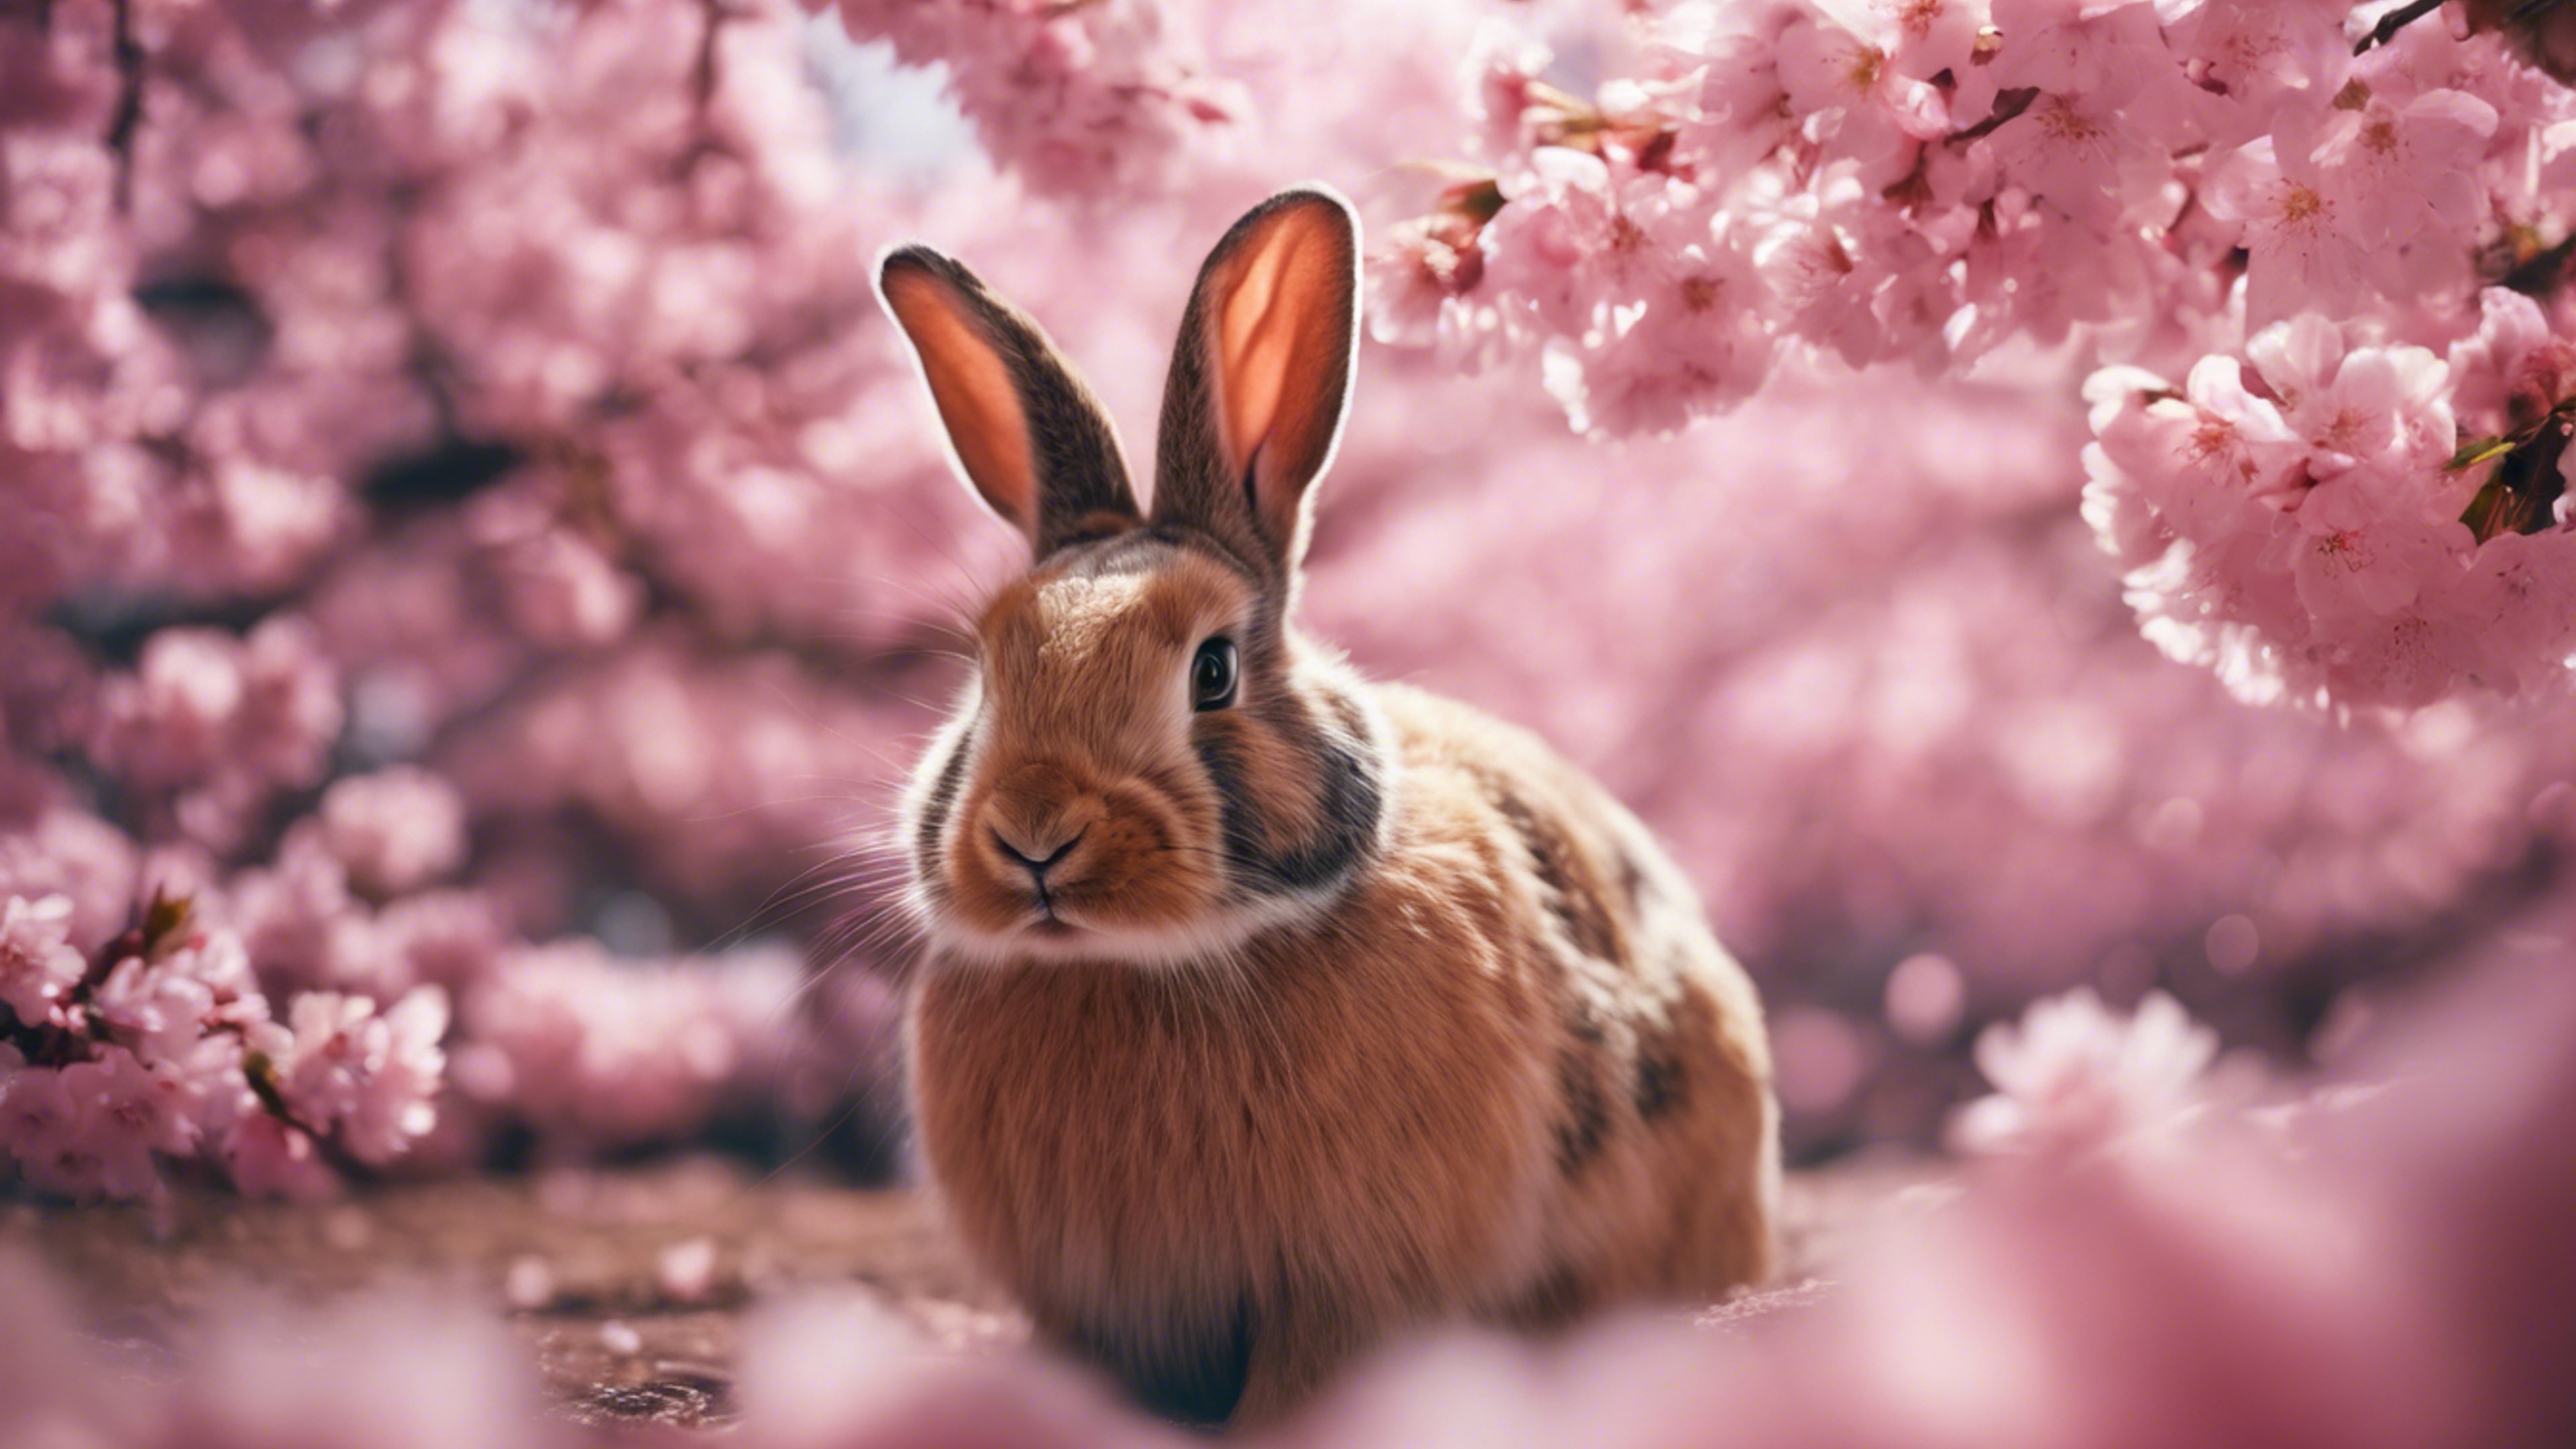 A rabbit amid a cherry blossom festival, surrounded by vibrant pink petals. Fond d'écran[82443ce6430044309a8d]